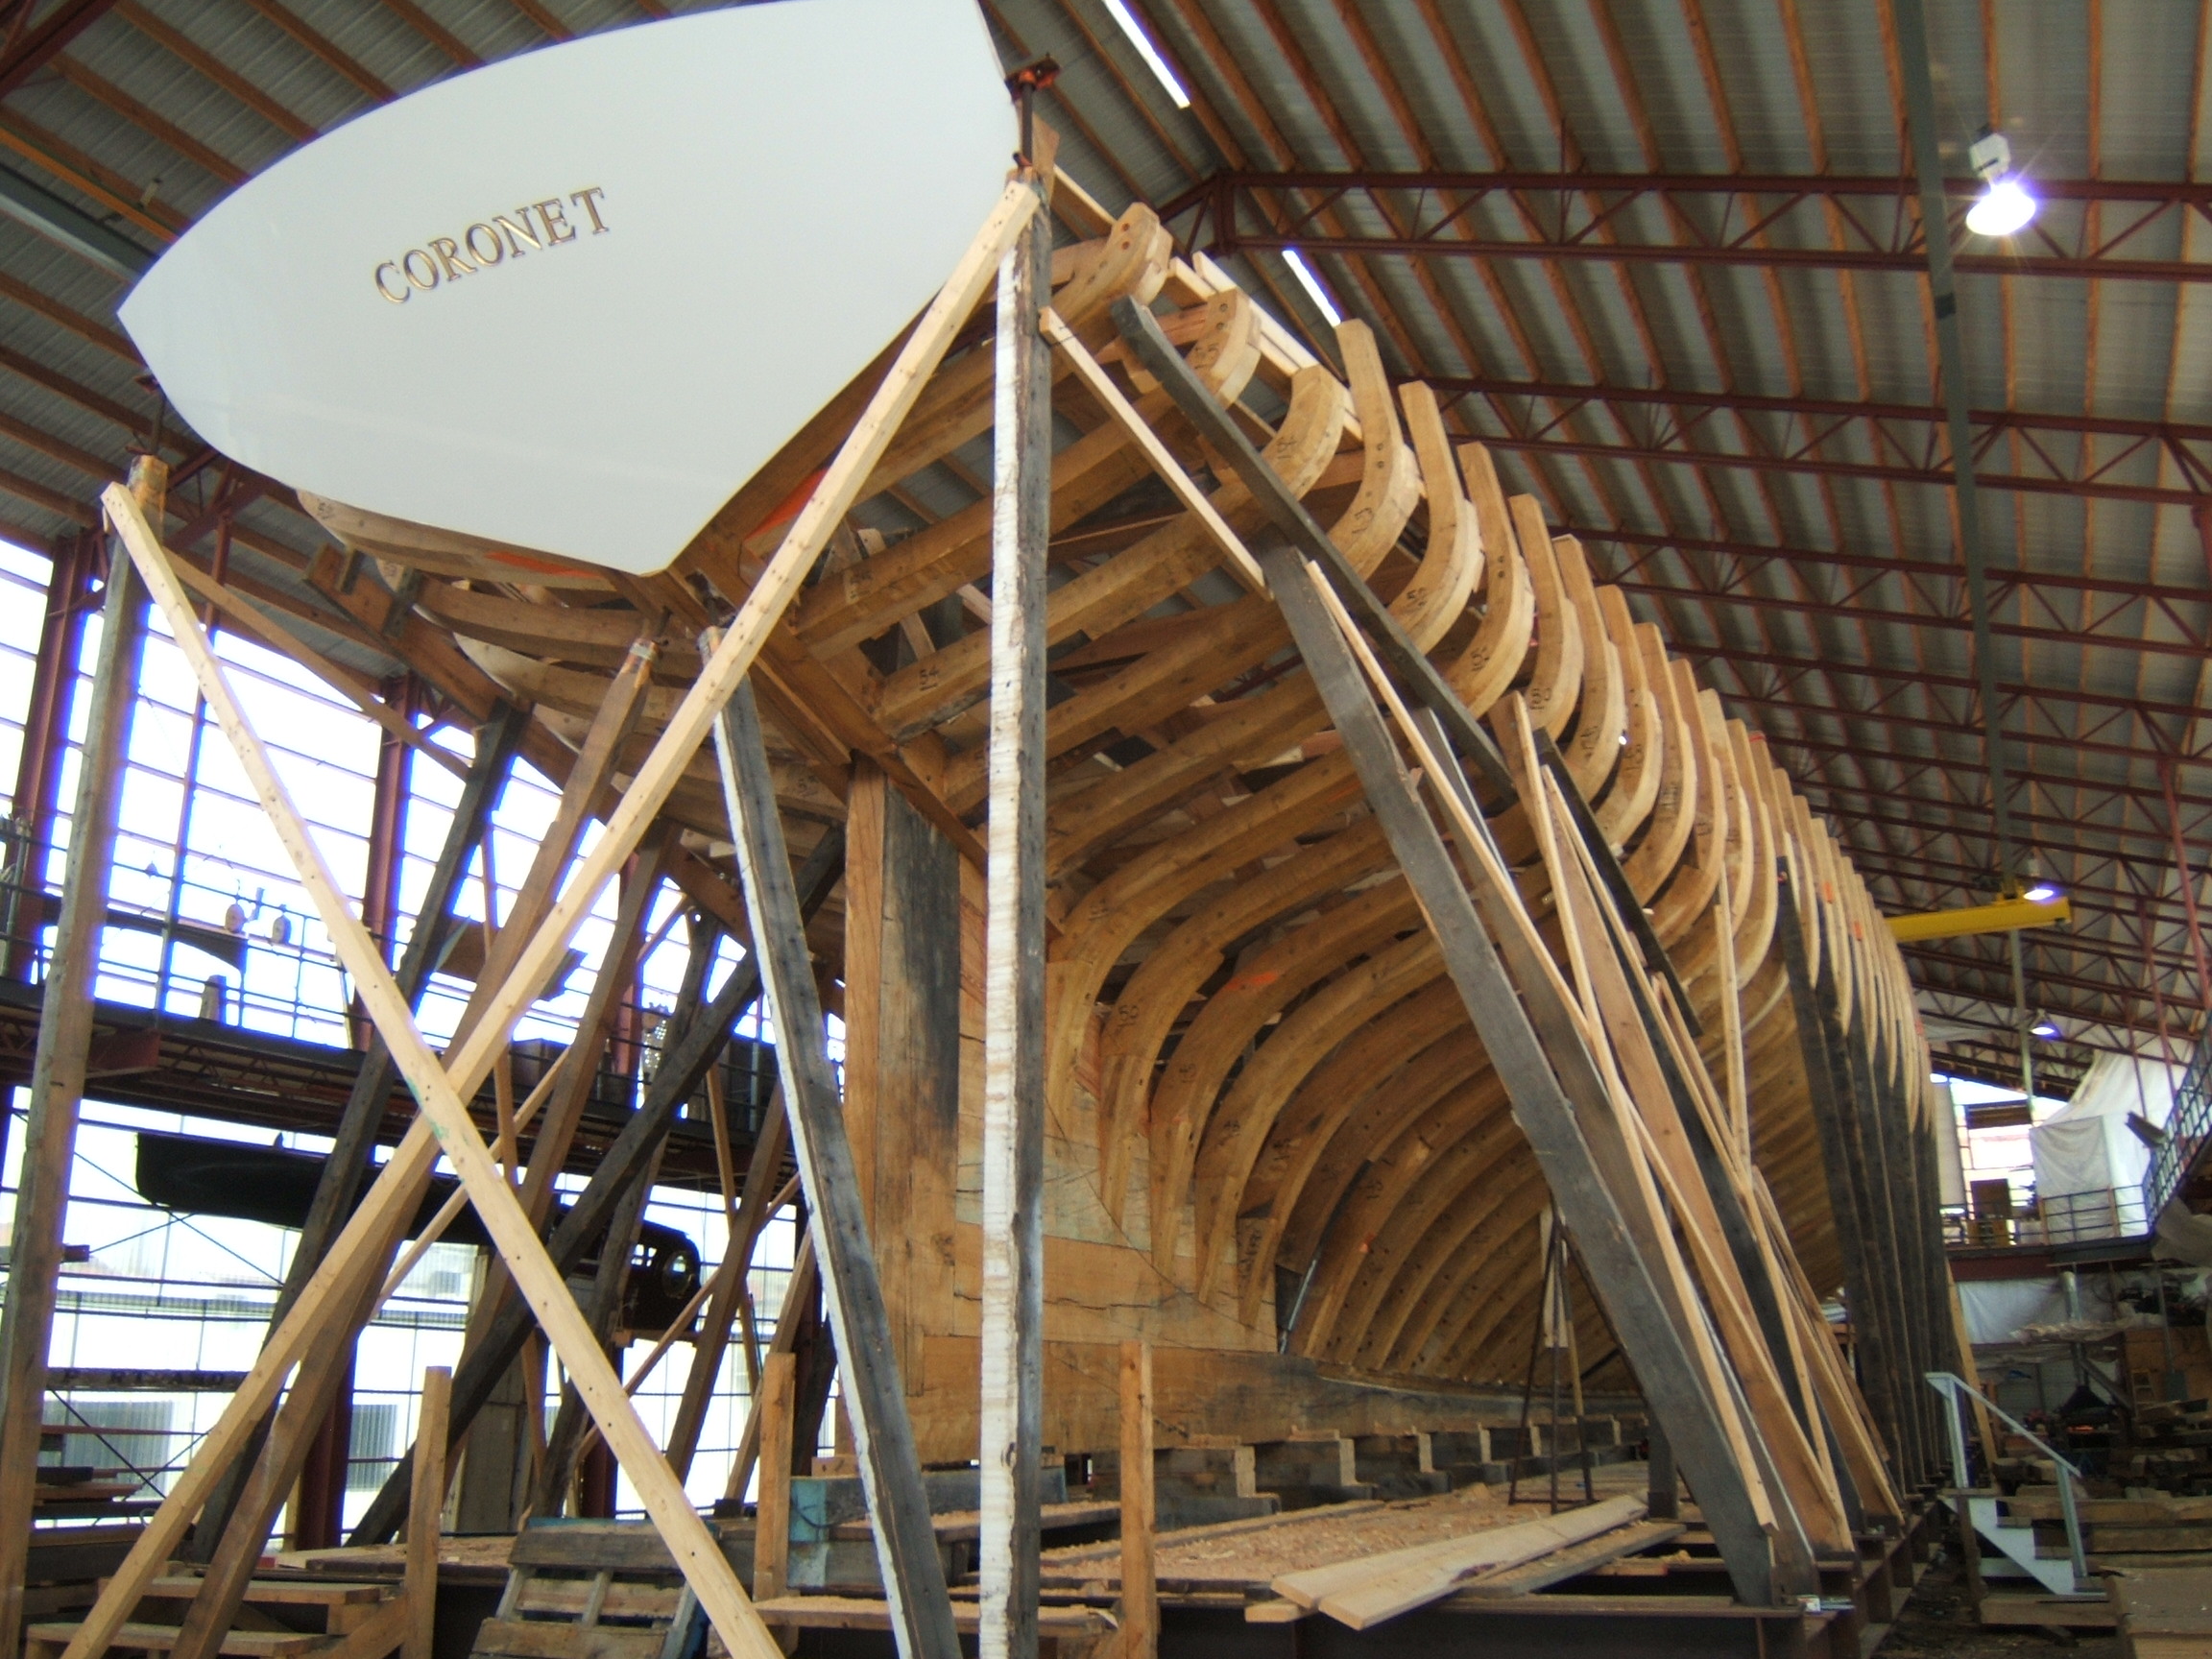 coronet sailboat restoration